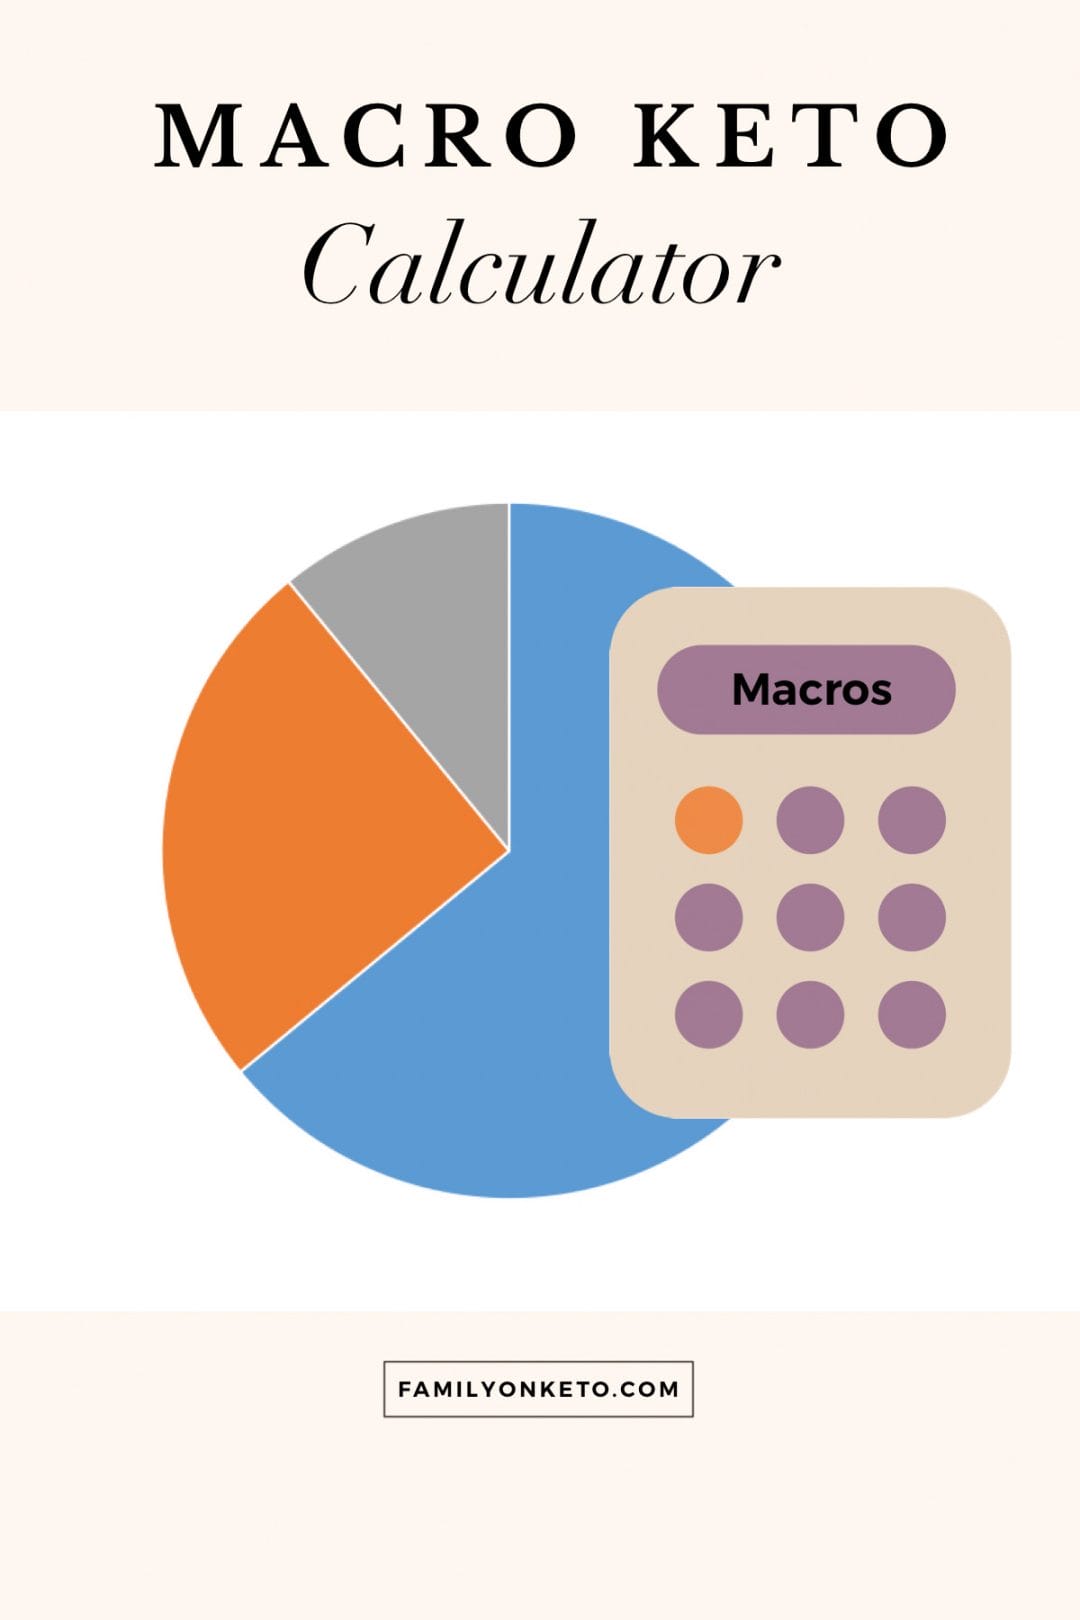 Keto macros calculator for keto diet